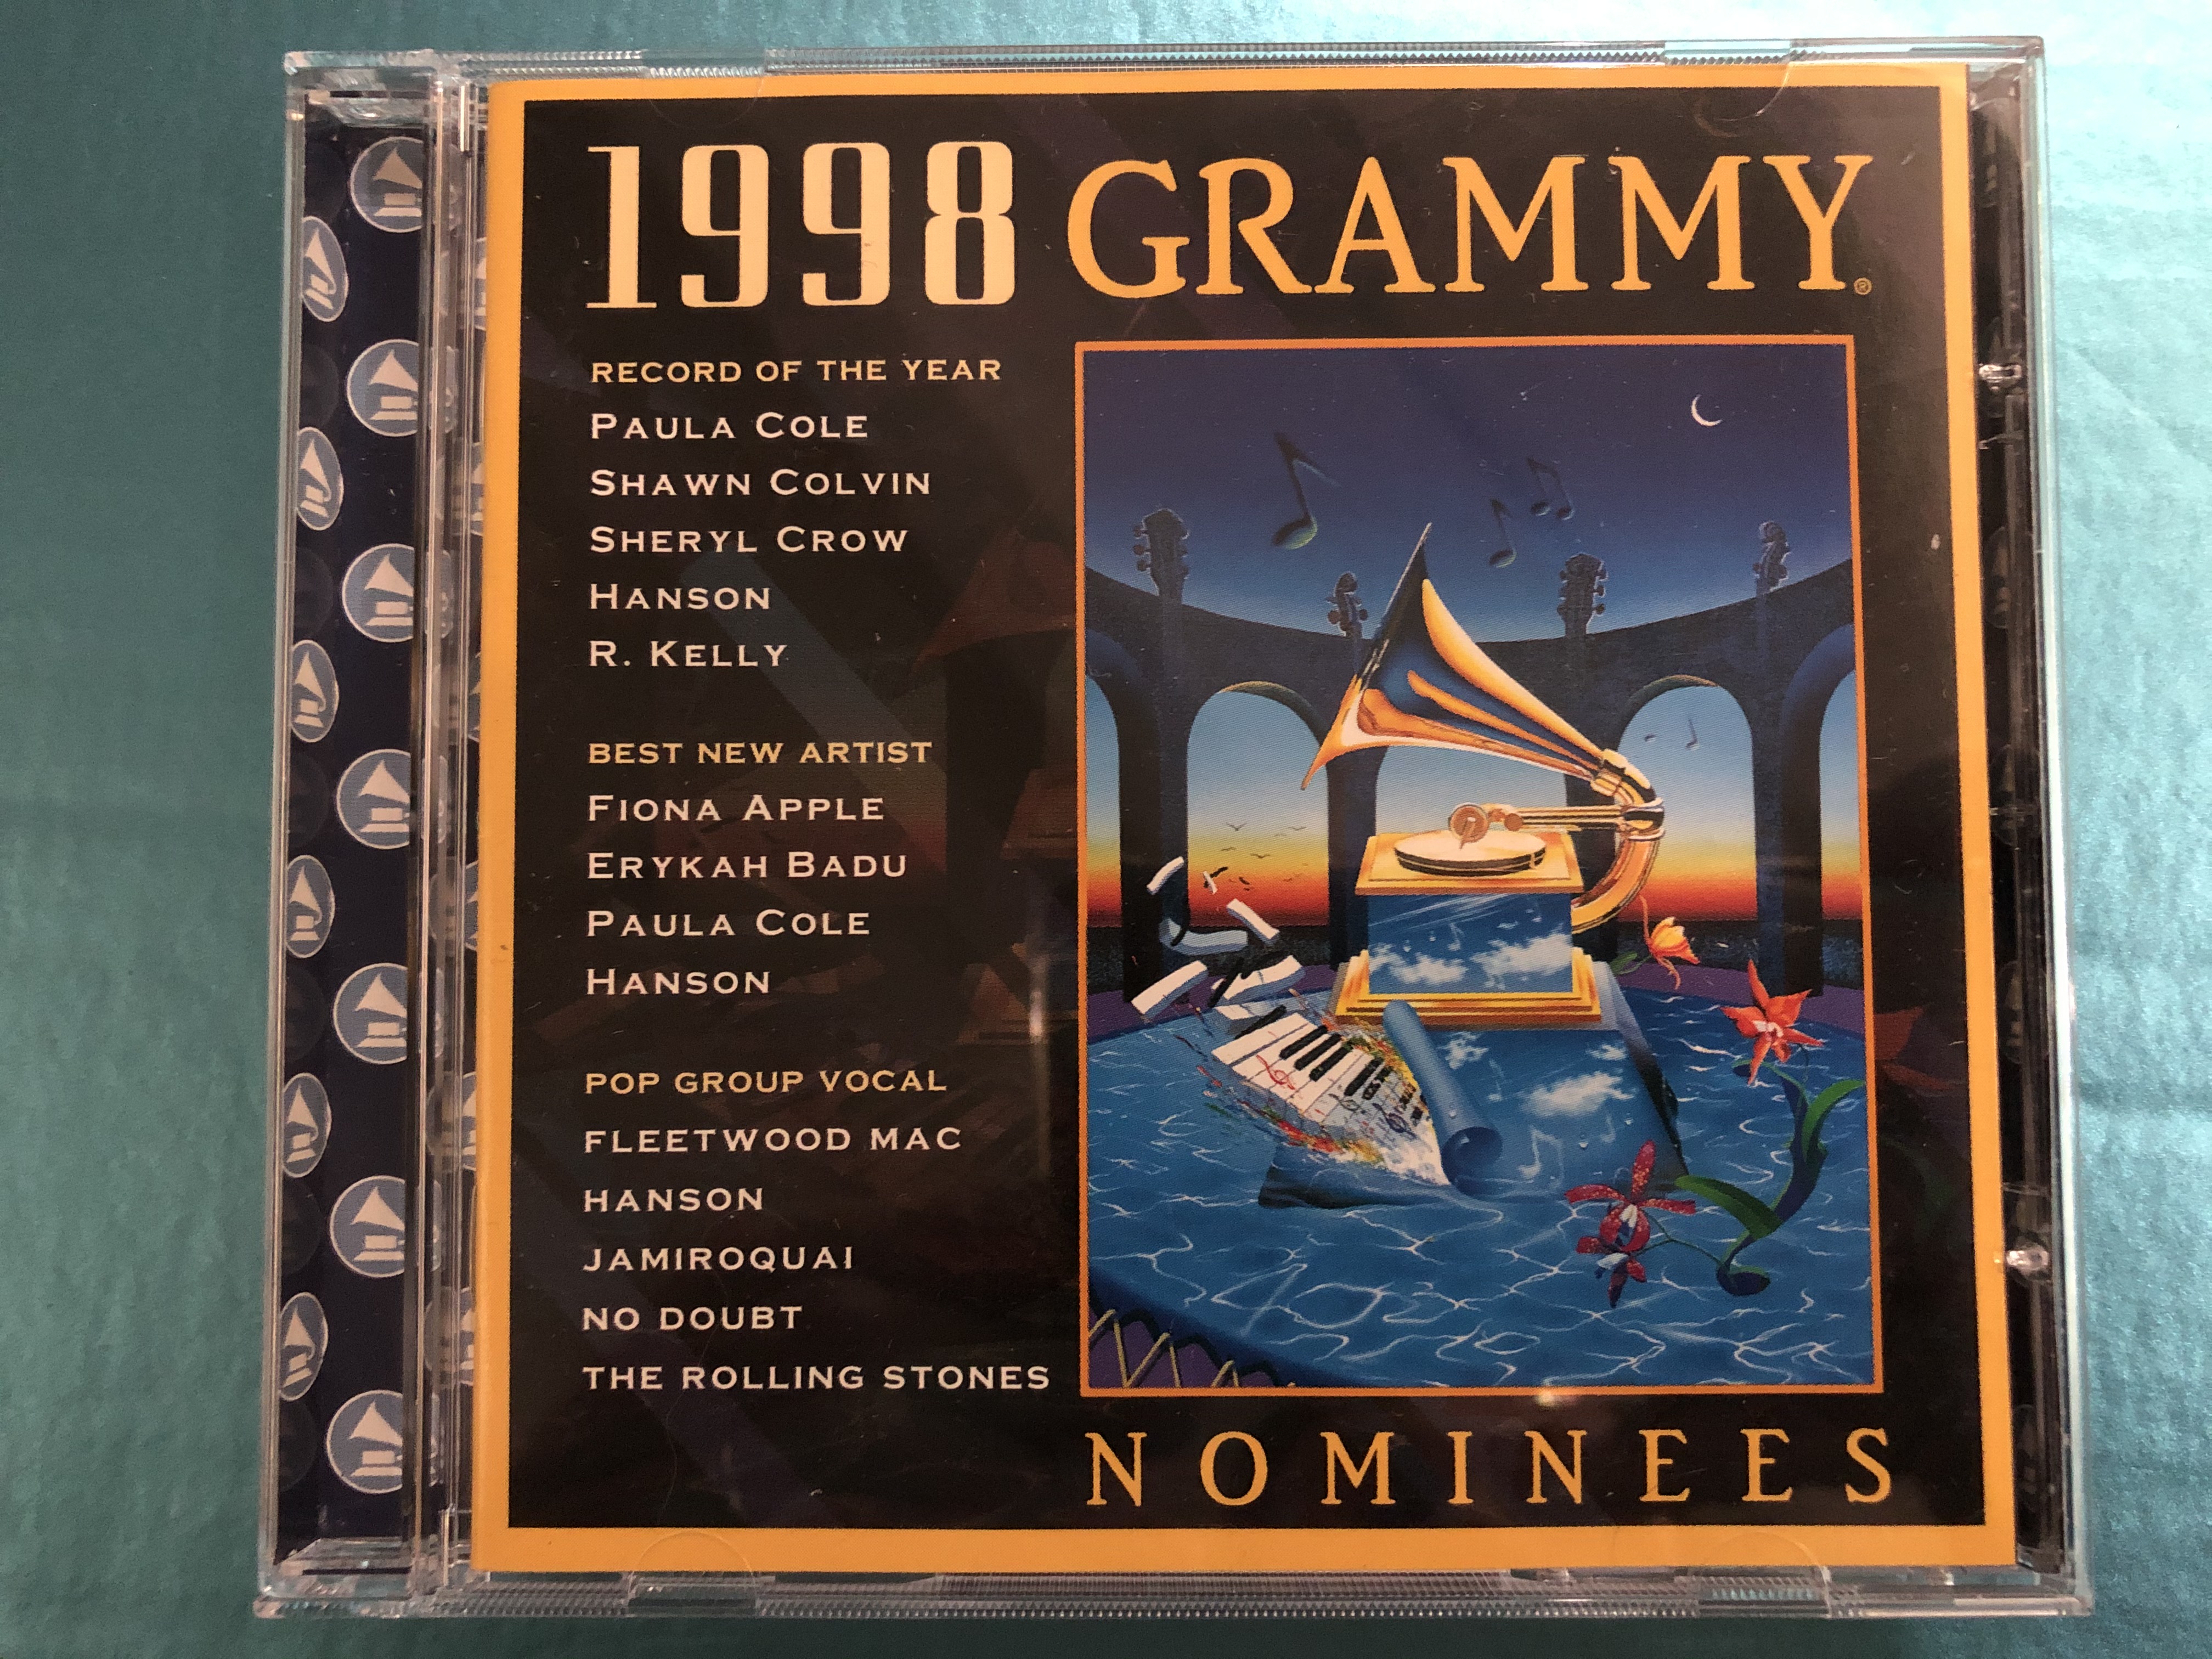 1998-grammy-nominees-record-of-the-year-paul-cole-shawn-colvin-sheryl-crow-hanson-r.-kelly-best-new-artist-fiona-apple-erykah-badu-paula-cole-hanson-mca-records-audio-cd-1998-mcd-11-1-.jpg